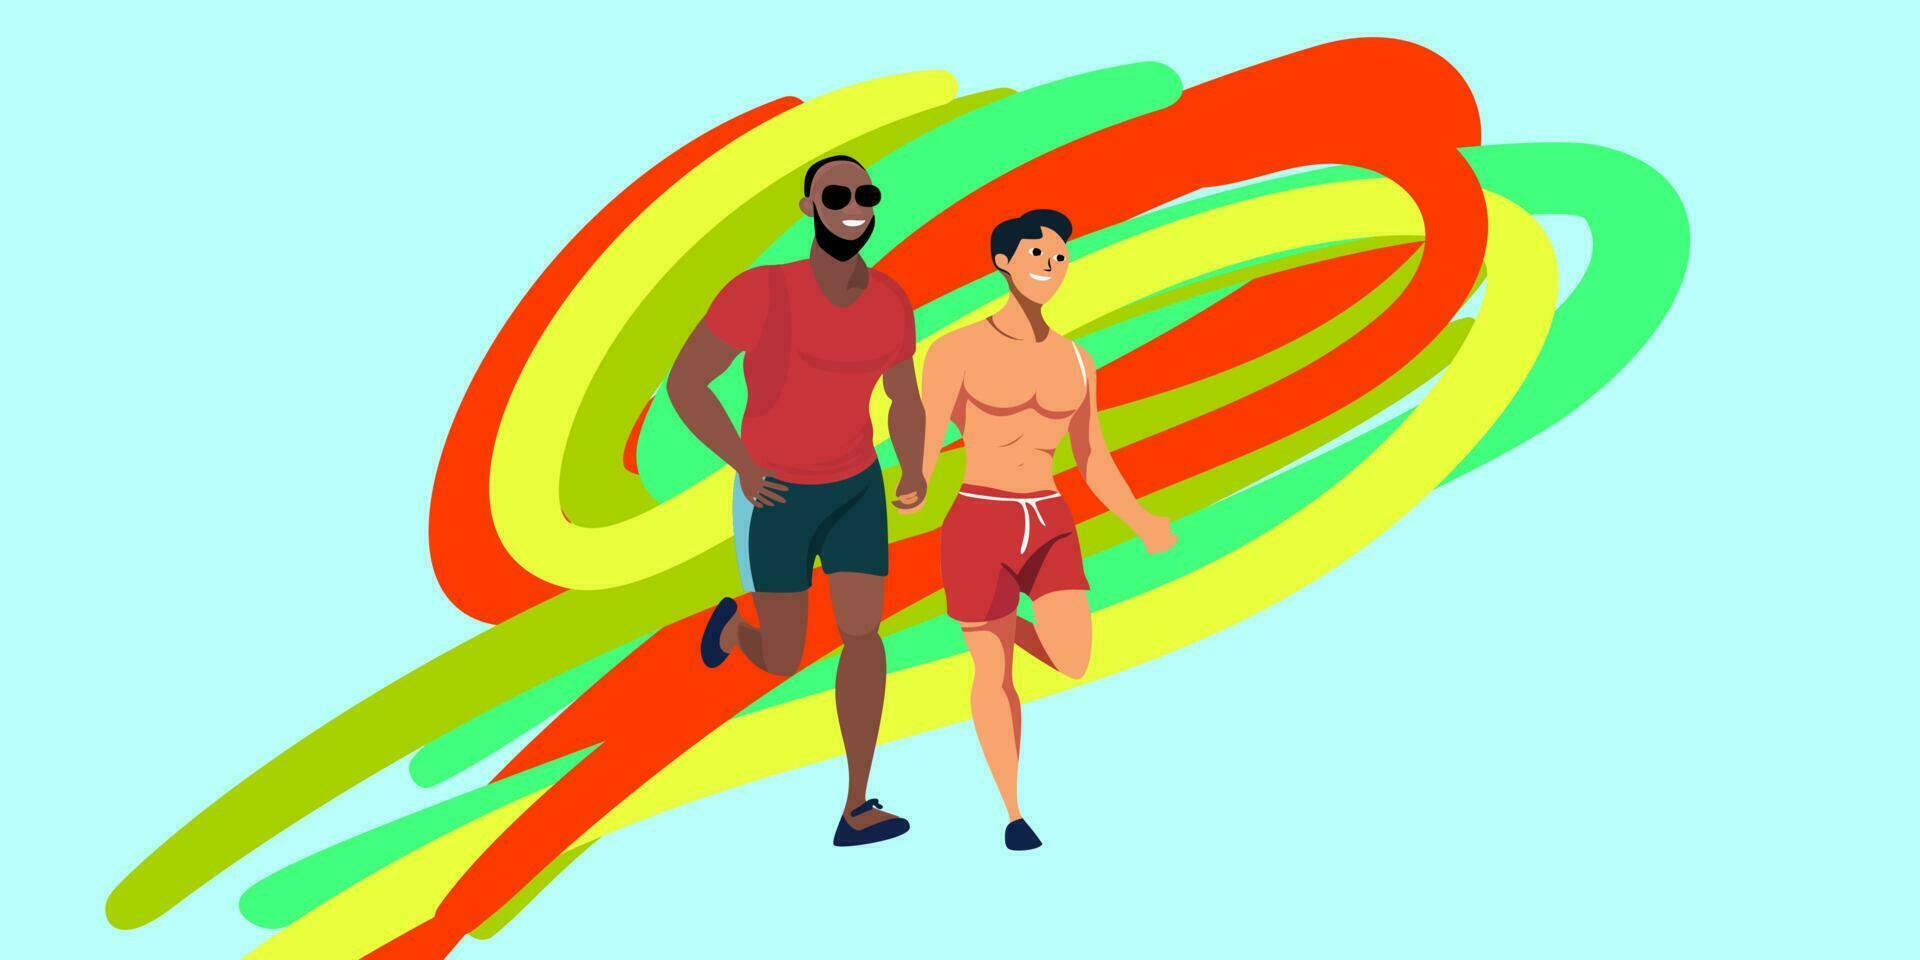 lgbtq gemeenschap concept. gelukkig jong homo rennen met lgbt regenboog vlag rennen samen en glimlachen Holding hand- vector illustratie